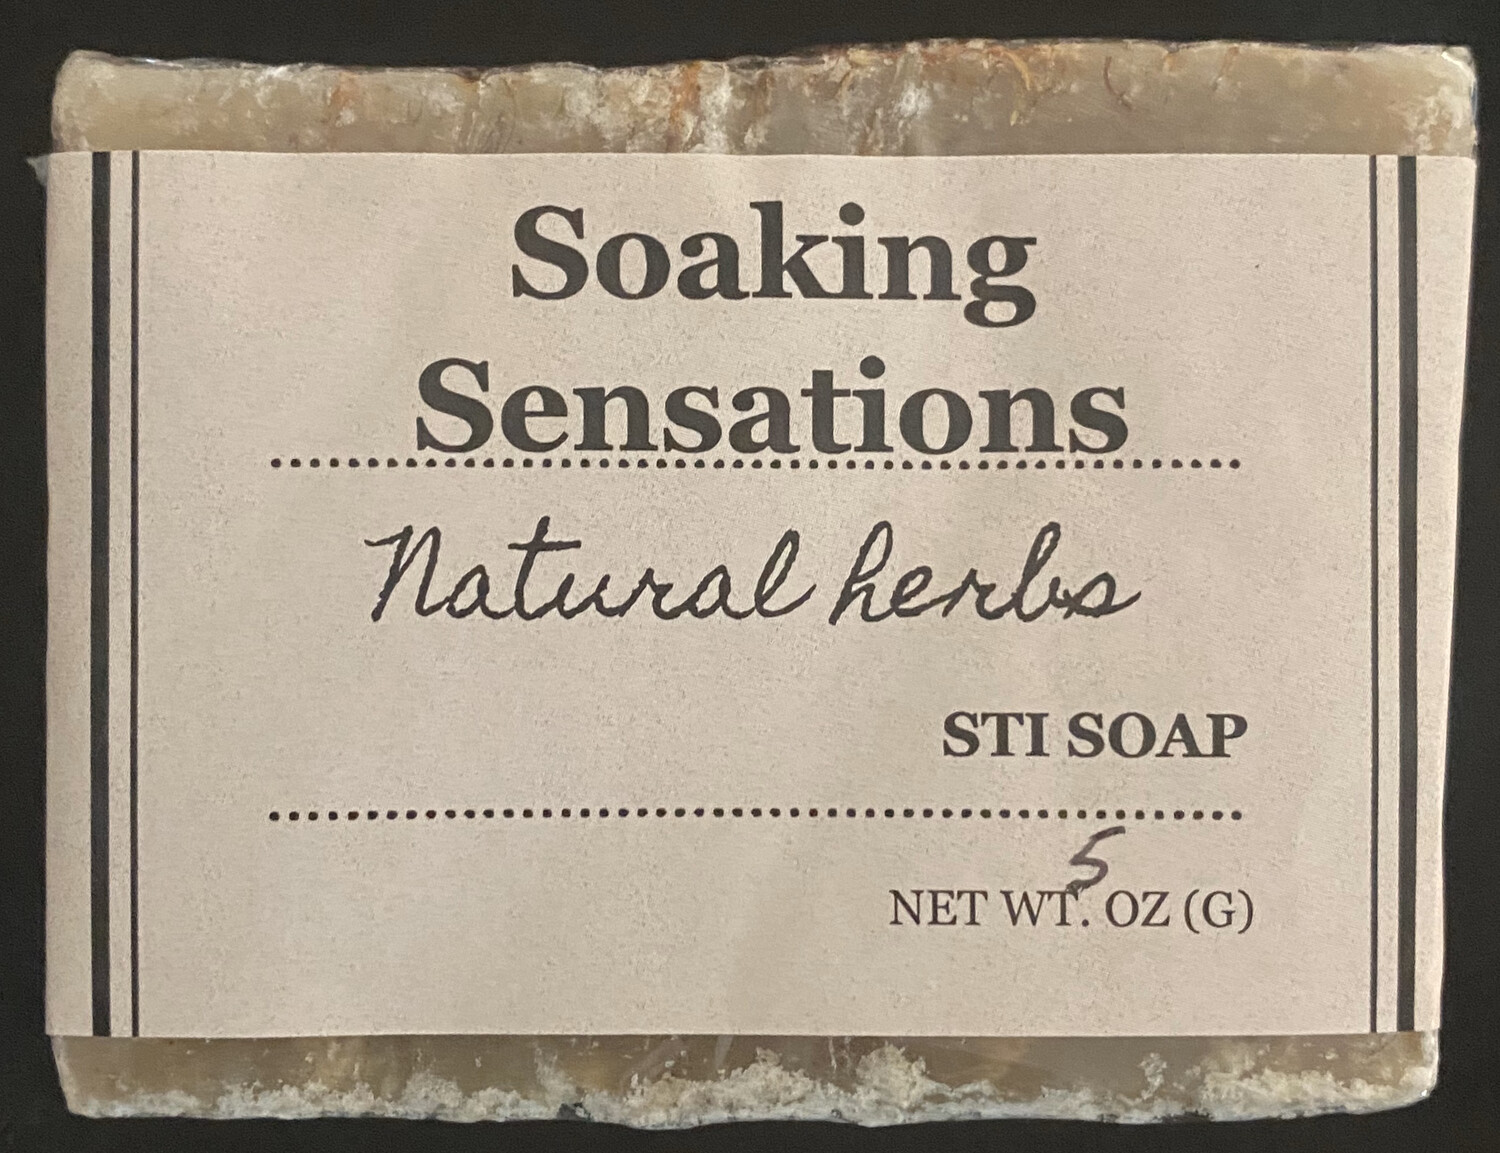 Natural herb STI Soap